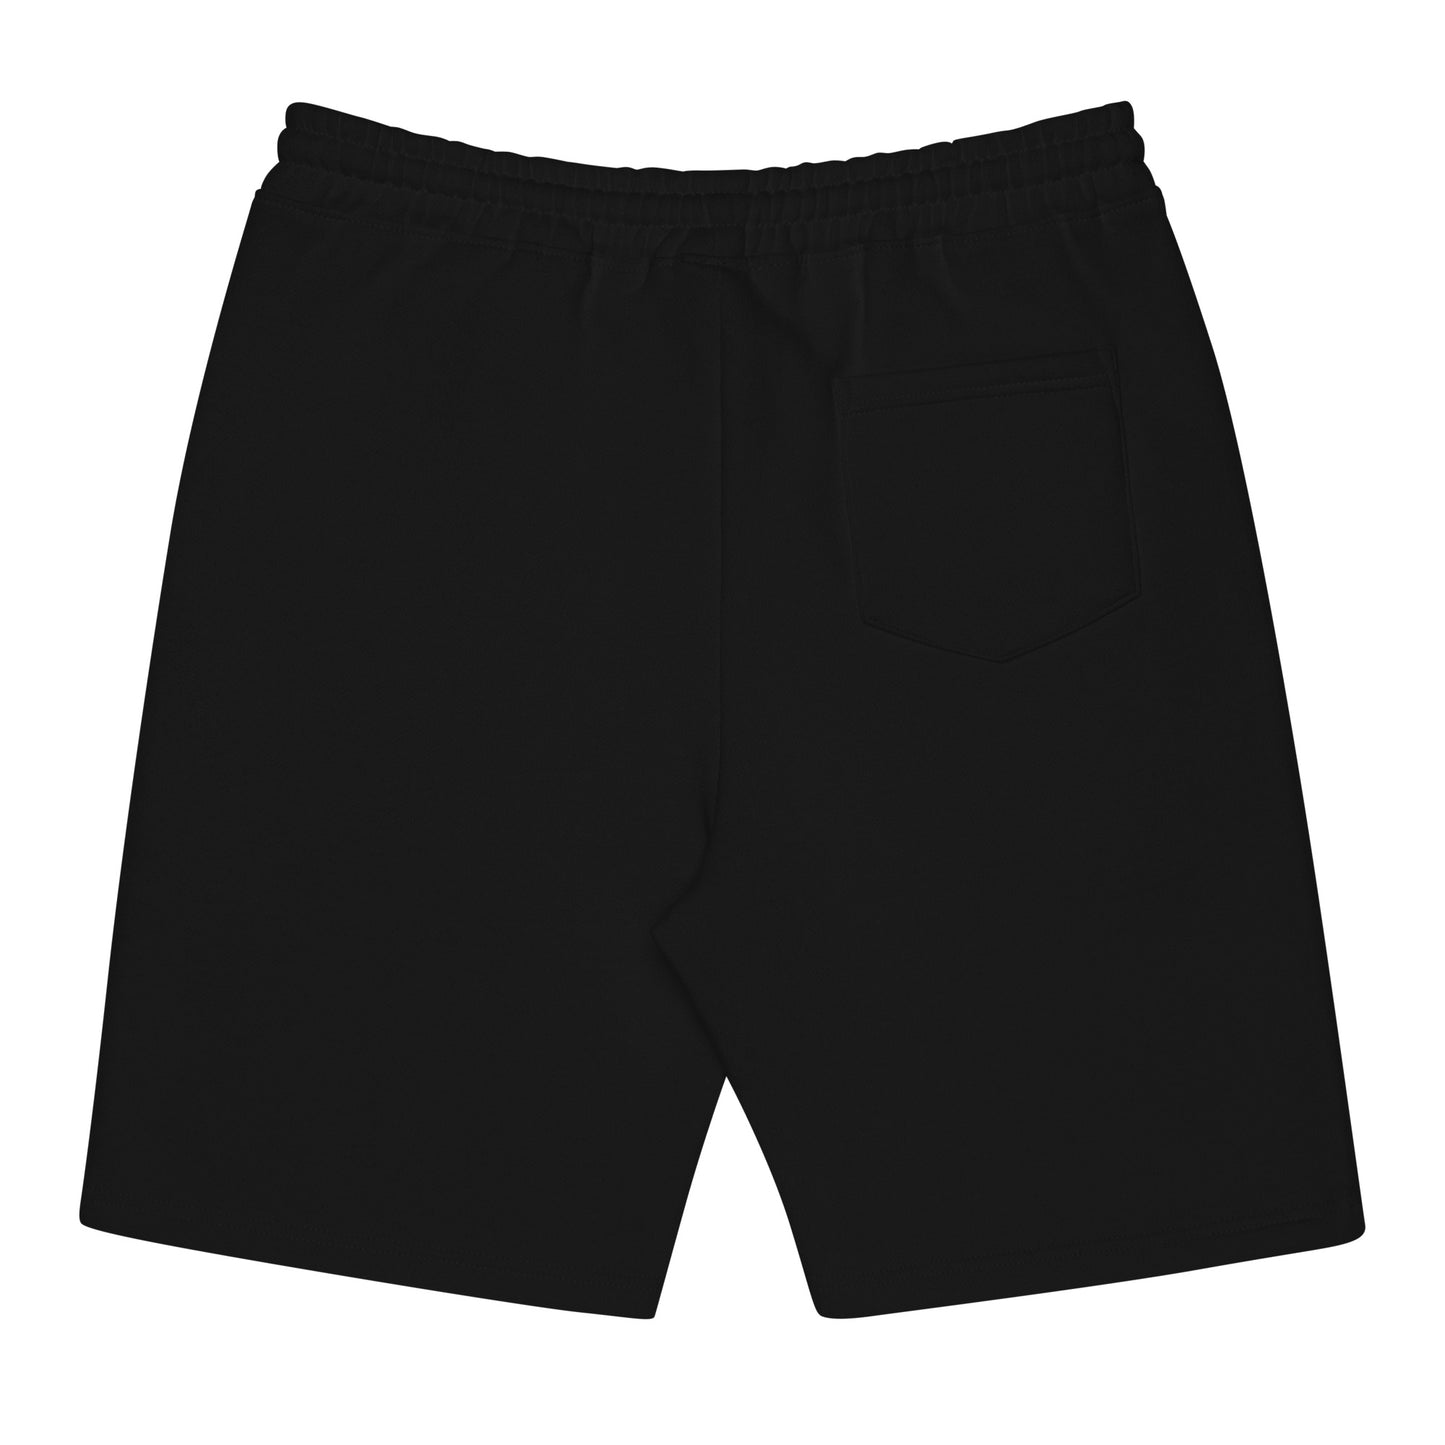 Men's shorts SLC LIVE ON matching bottom